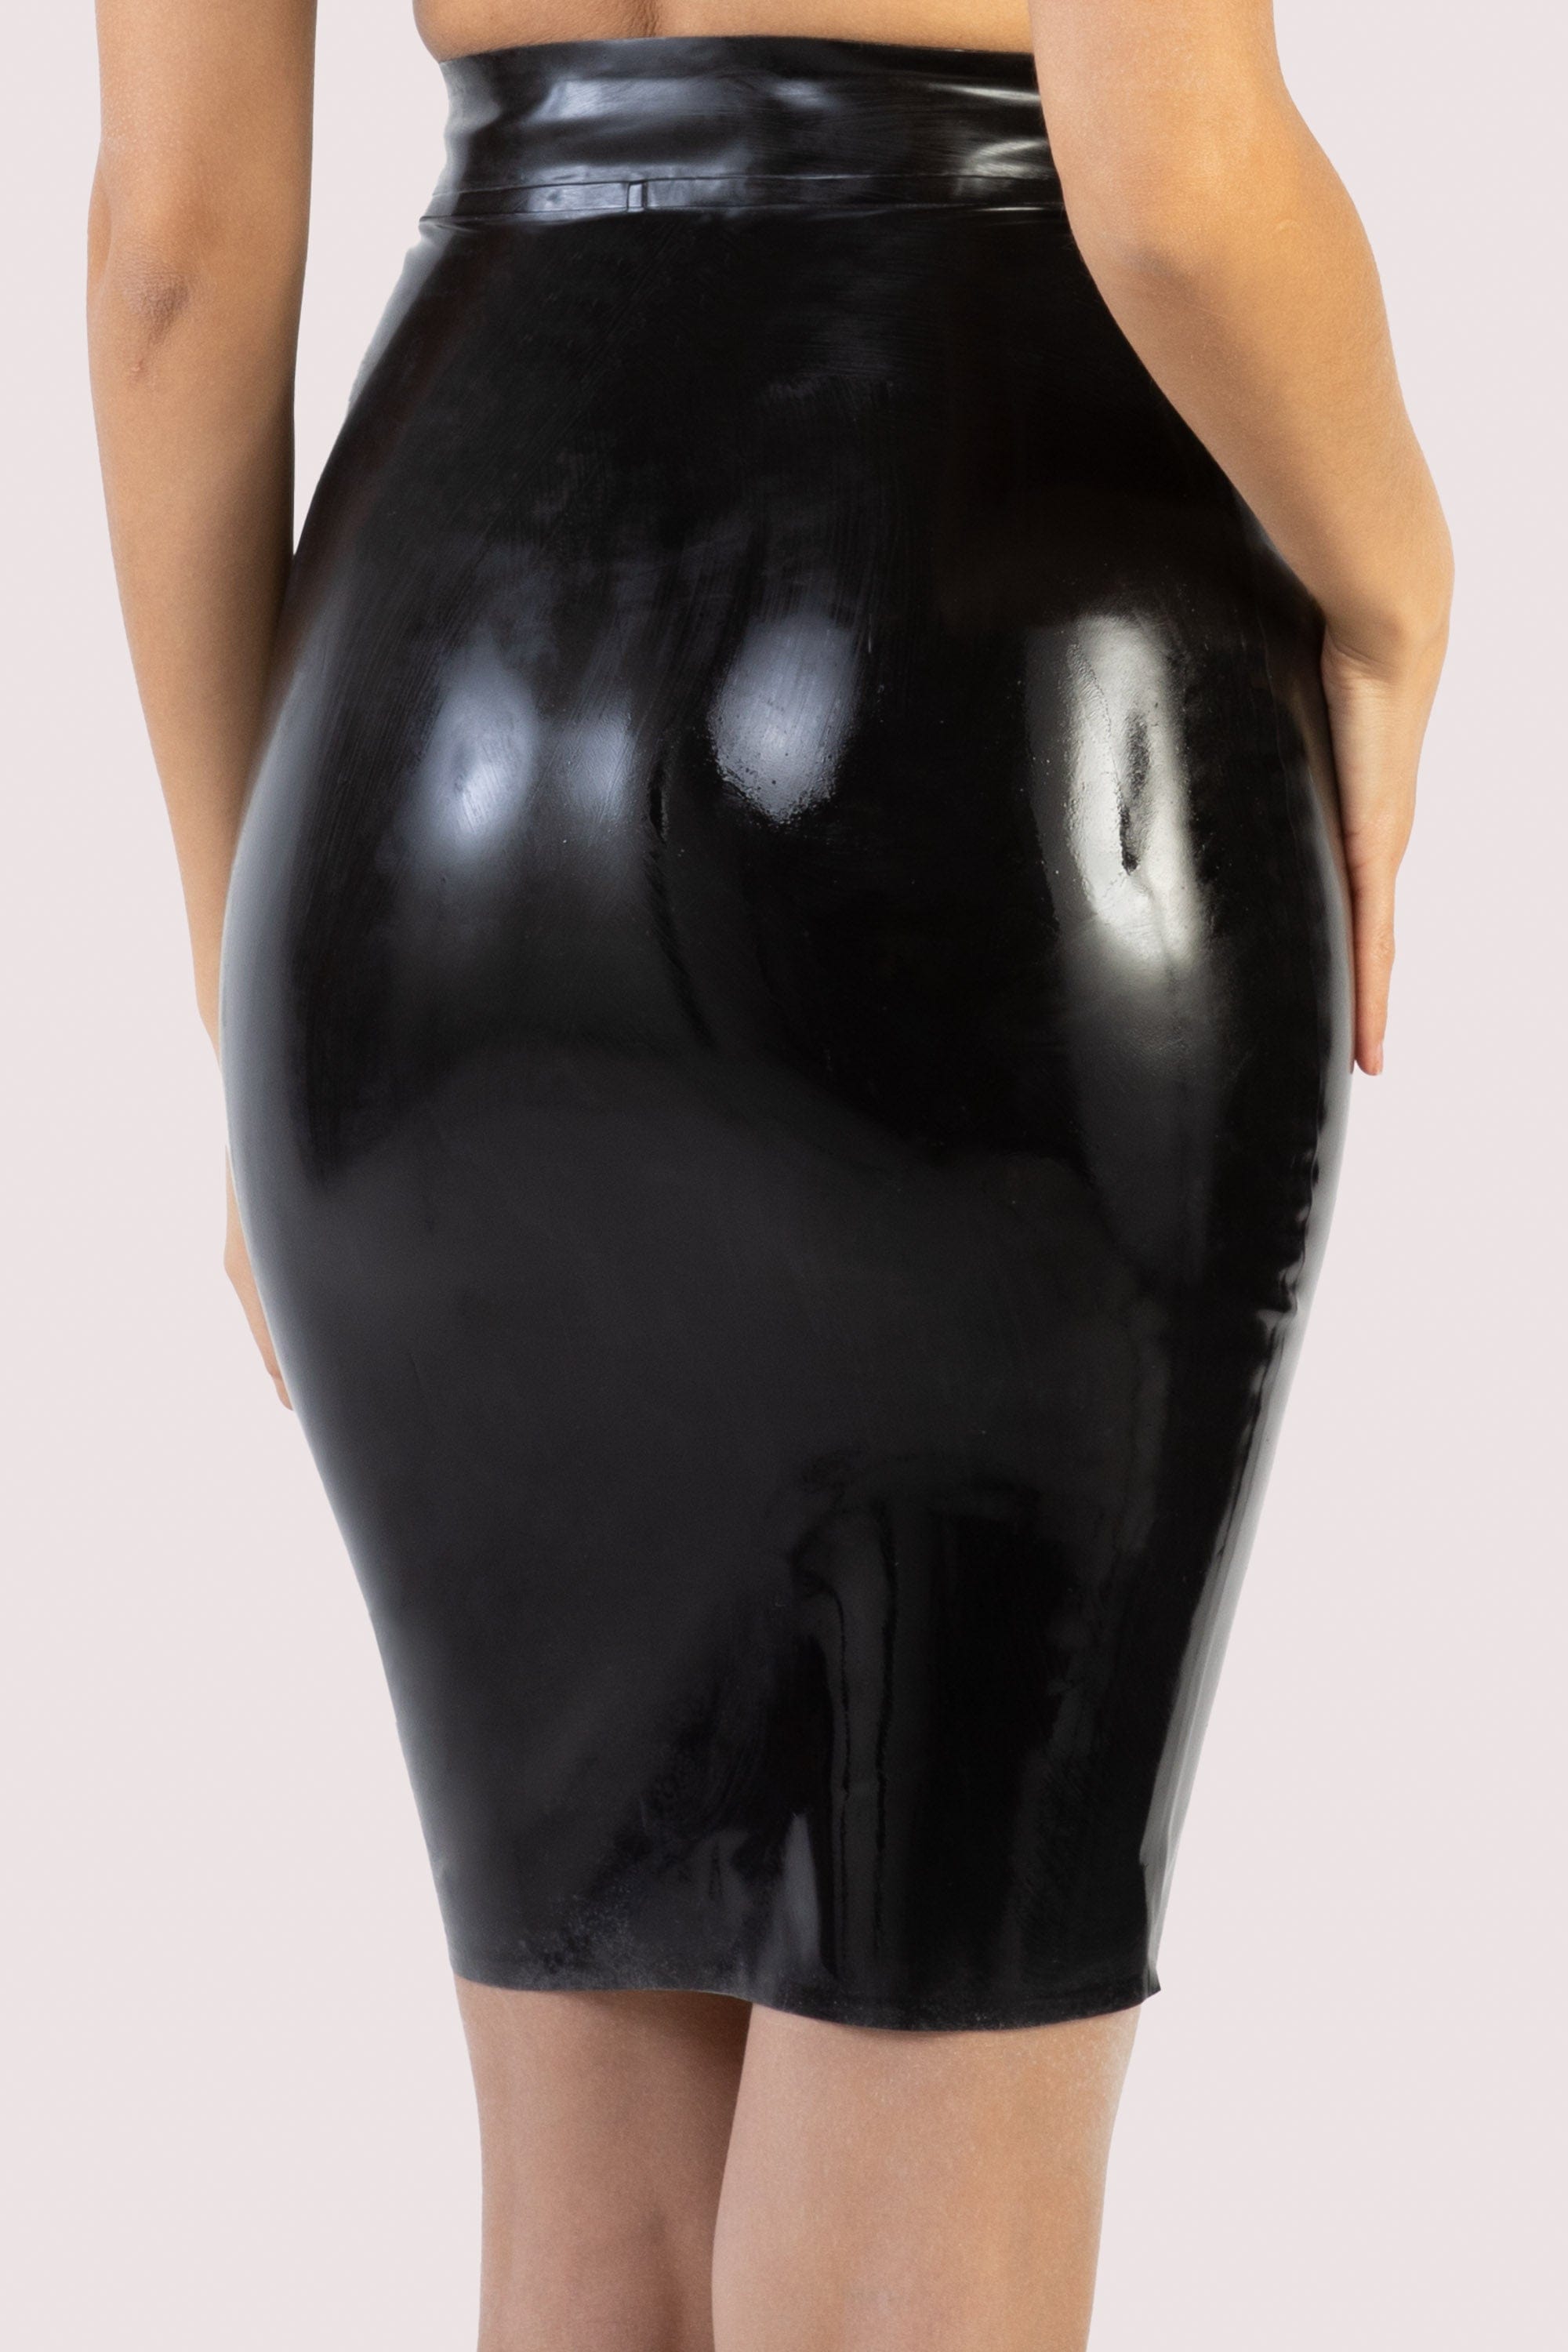 Imogen Black Latex and Ring Pencil Skirt